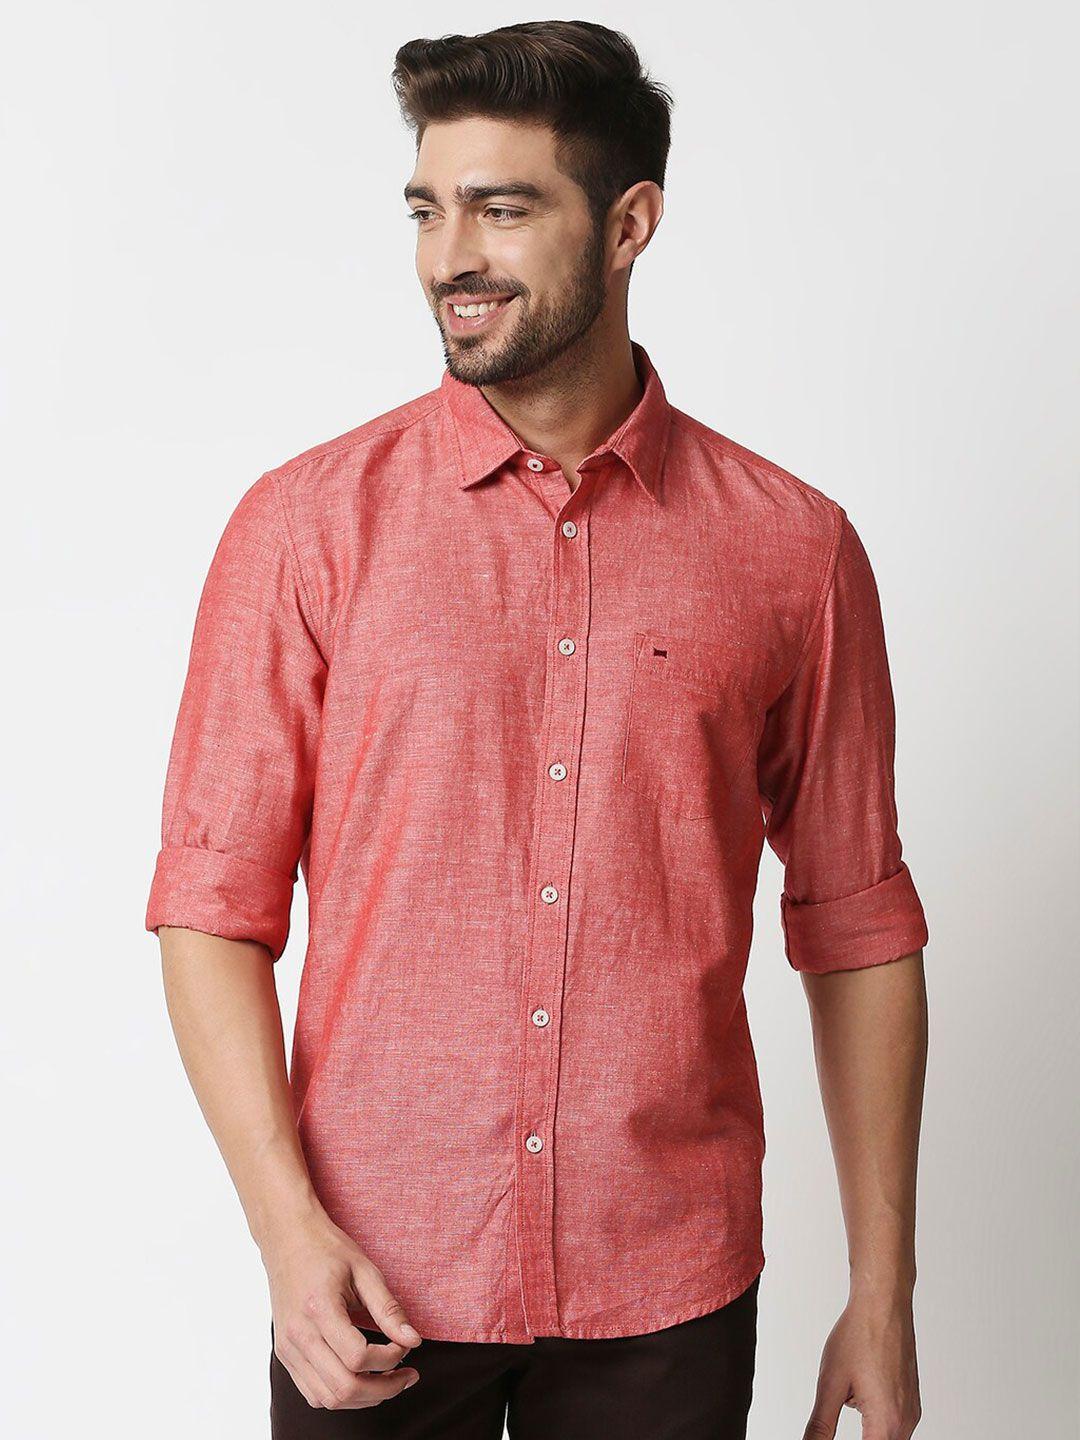 basics-men-peach-coloured-solid-slim-fit-cotton-linen-casual-shirt